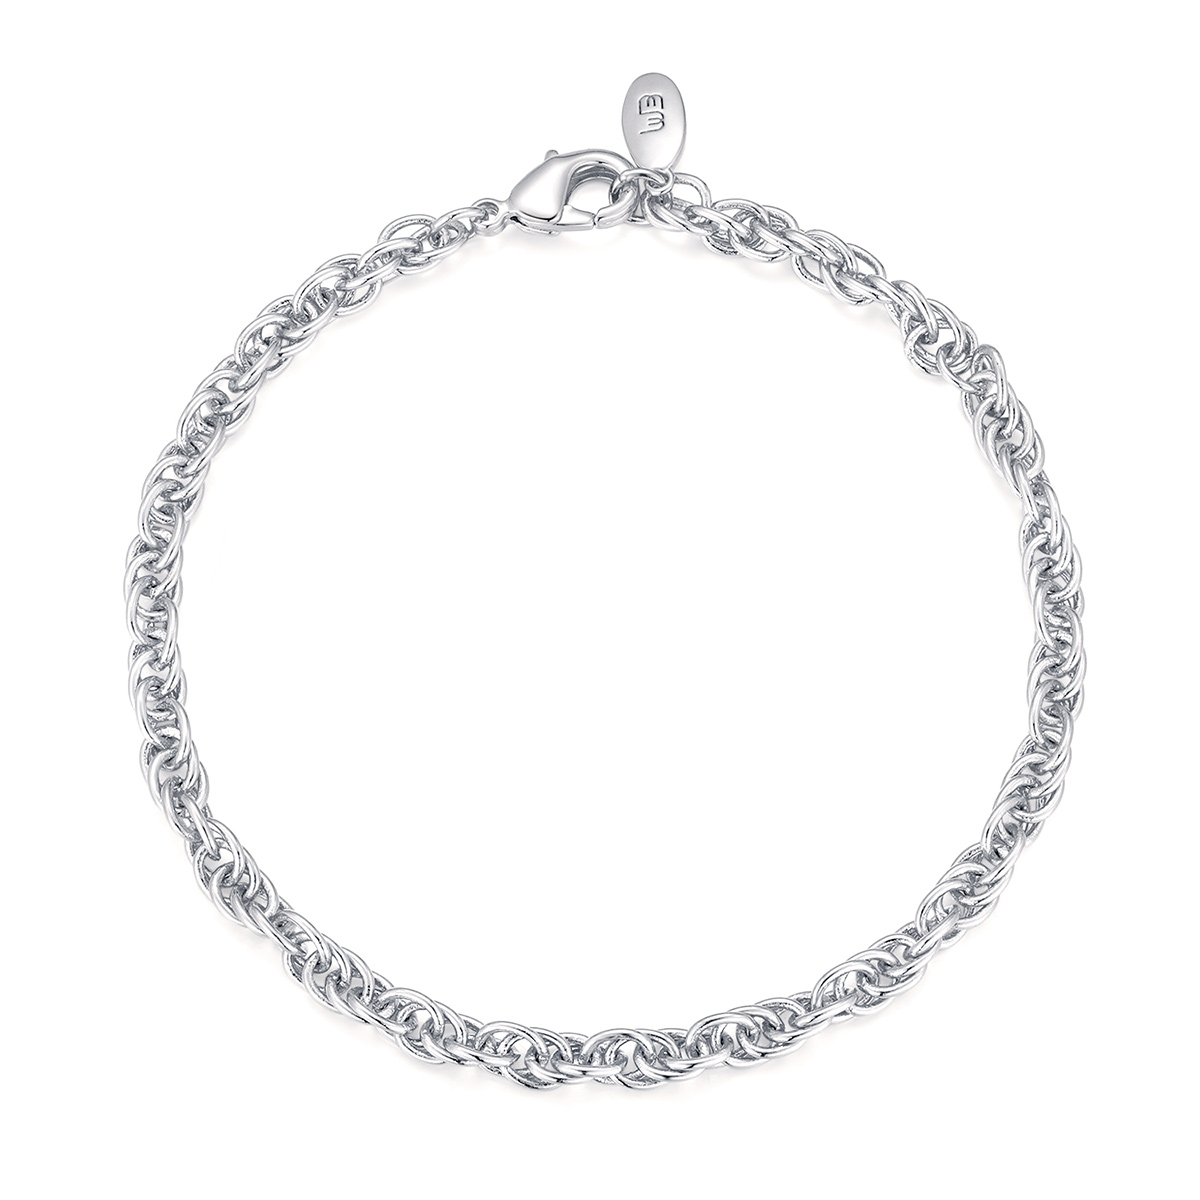 Pantolin Bagatelle - River Chain armband, silver